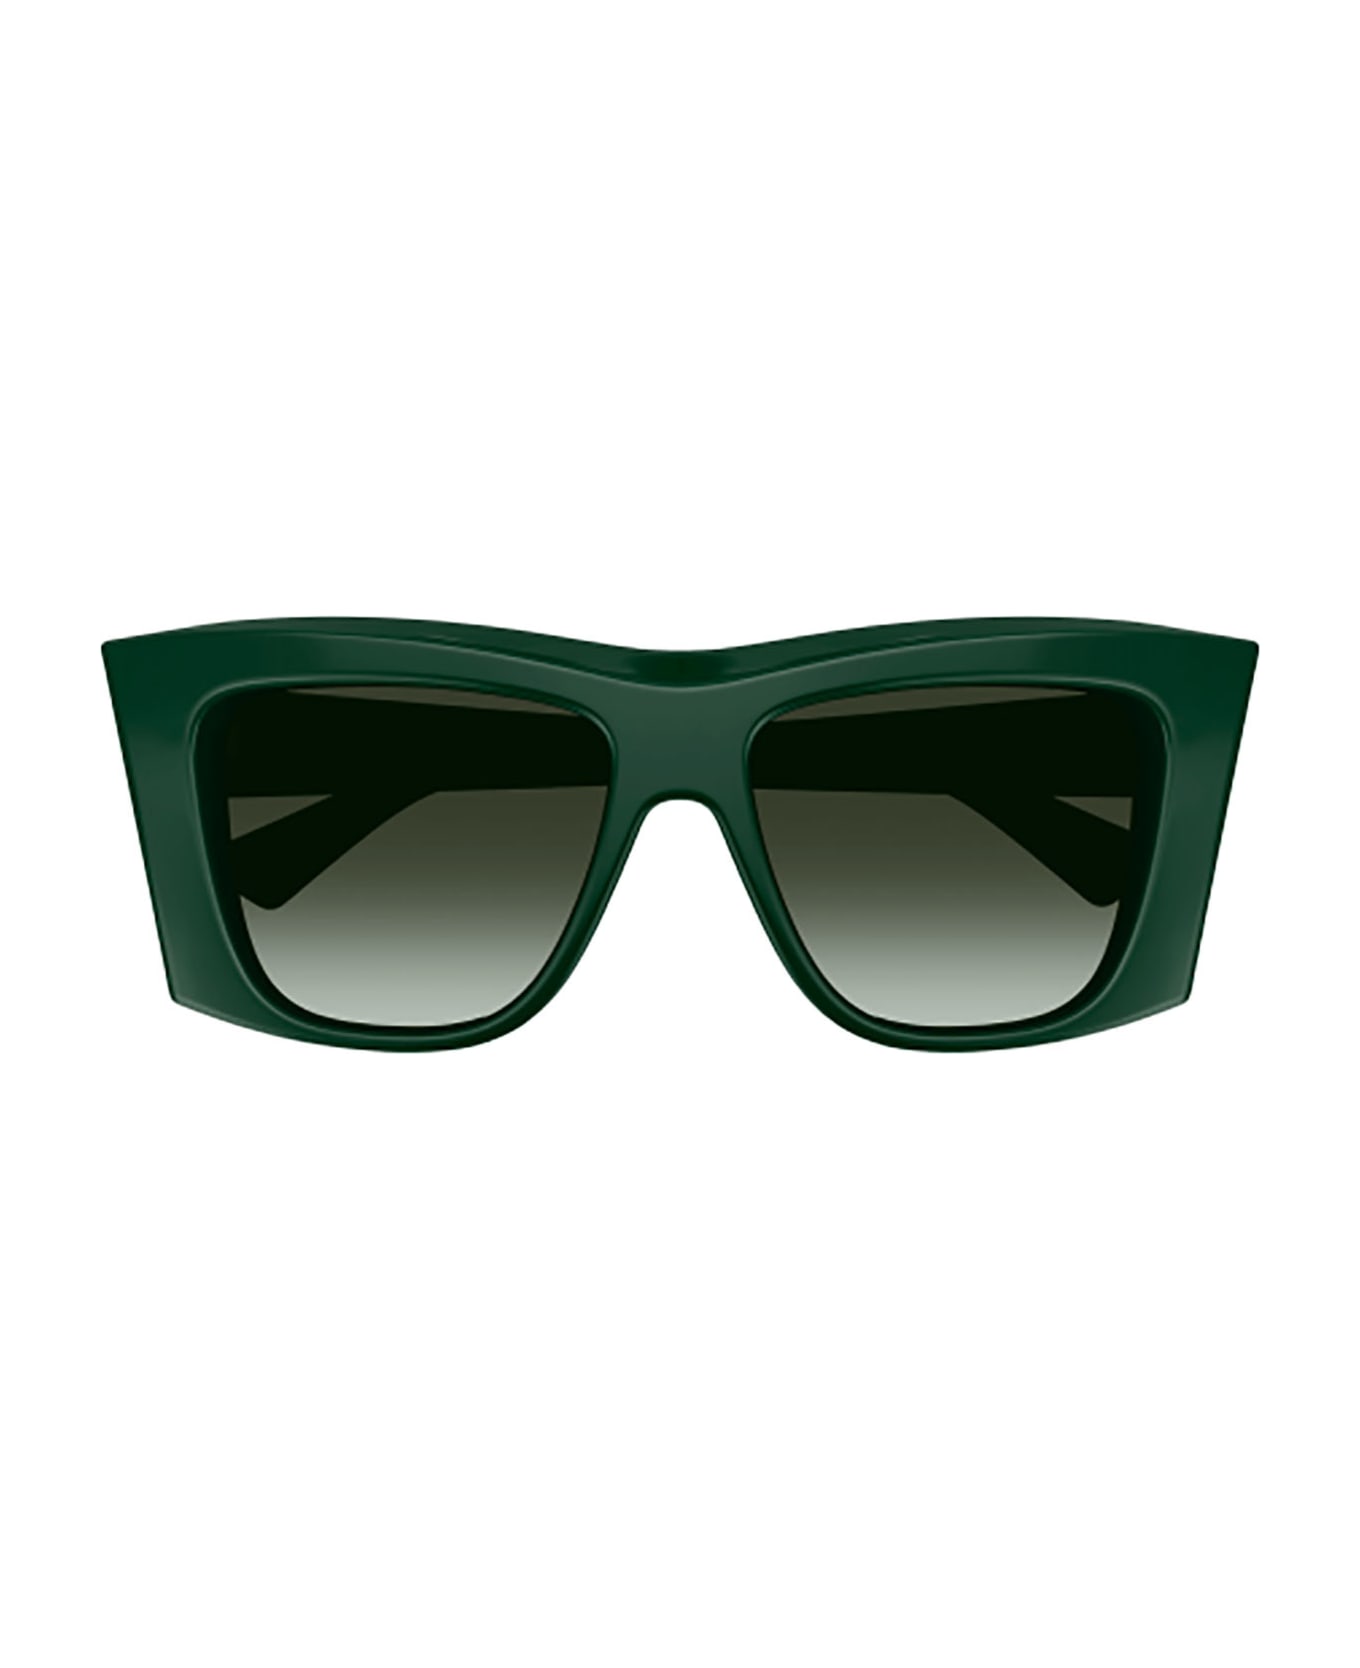 Bottega Veneta Eyewear Bv1270s Sunglasses - 004 green green green